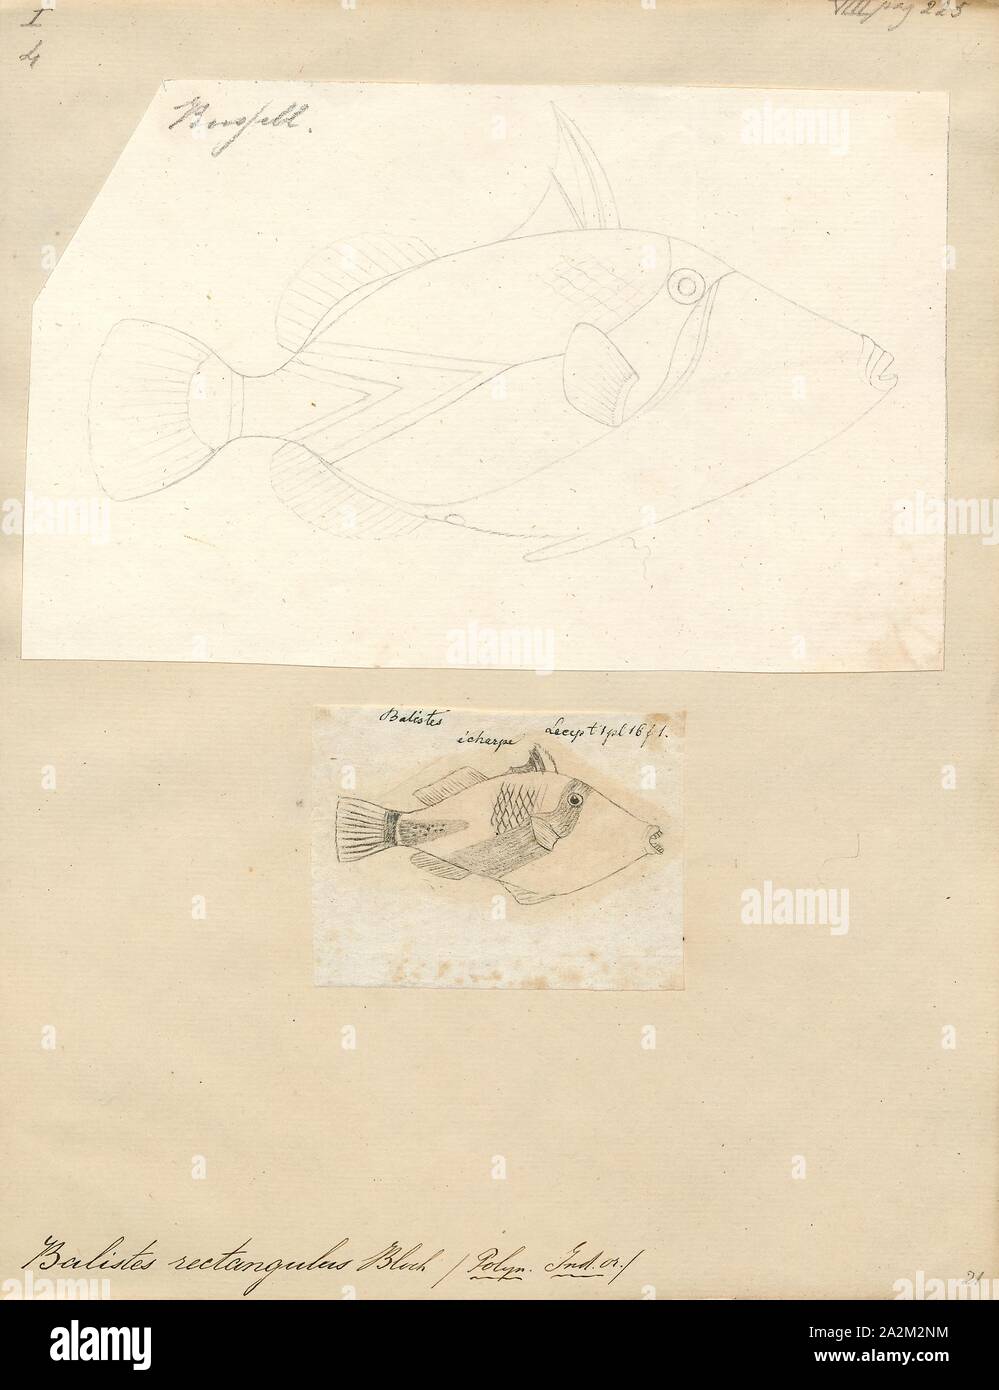 Balistes rectangulus, Print, 1700-1880 Stock Photo